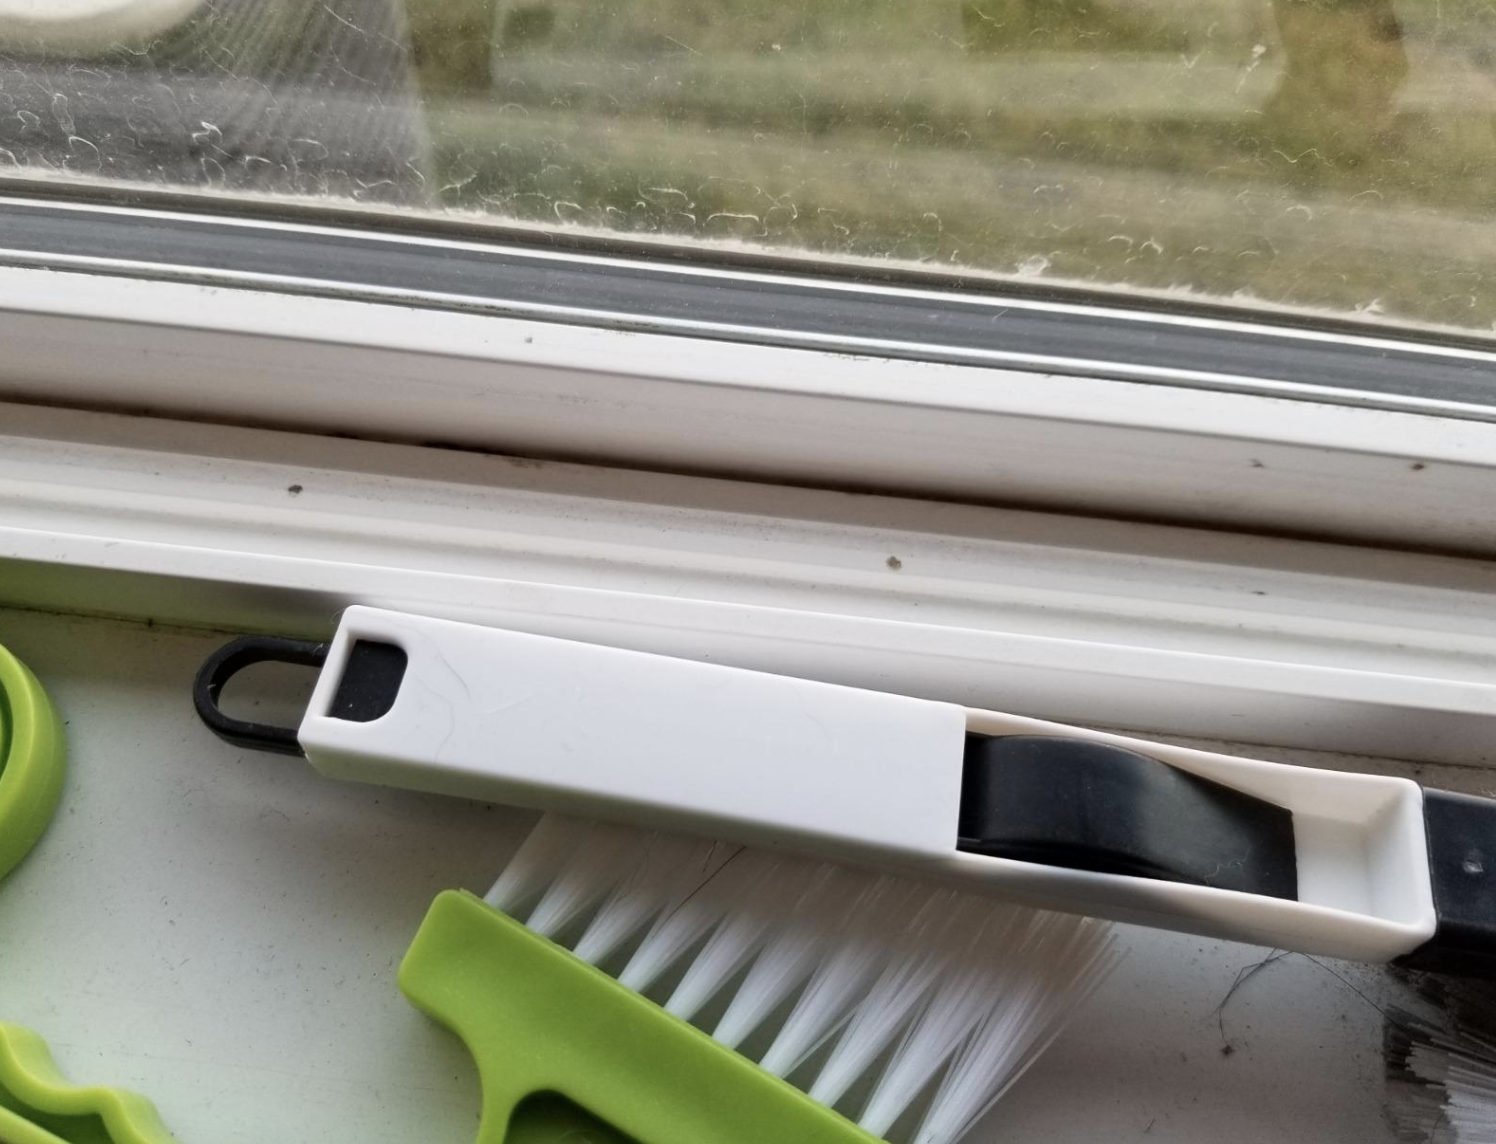 Window Track Cleaning Brush, Sliding Window Cleaning Tool, Window Cleaning  Brush Window Groove Cleaning Brush, Window Sill Cleaner Tool Dirt Dust,  Grime Remov…